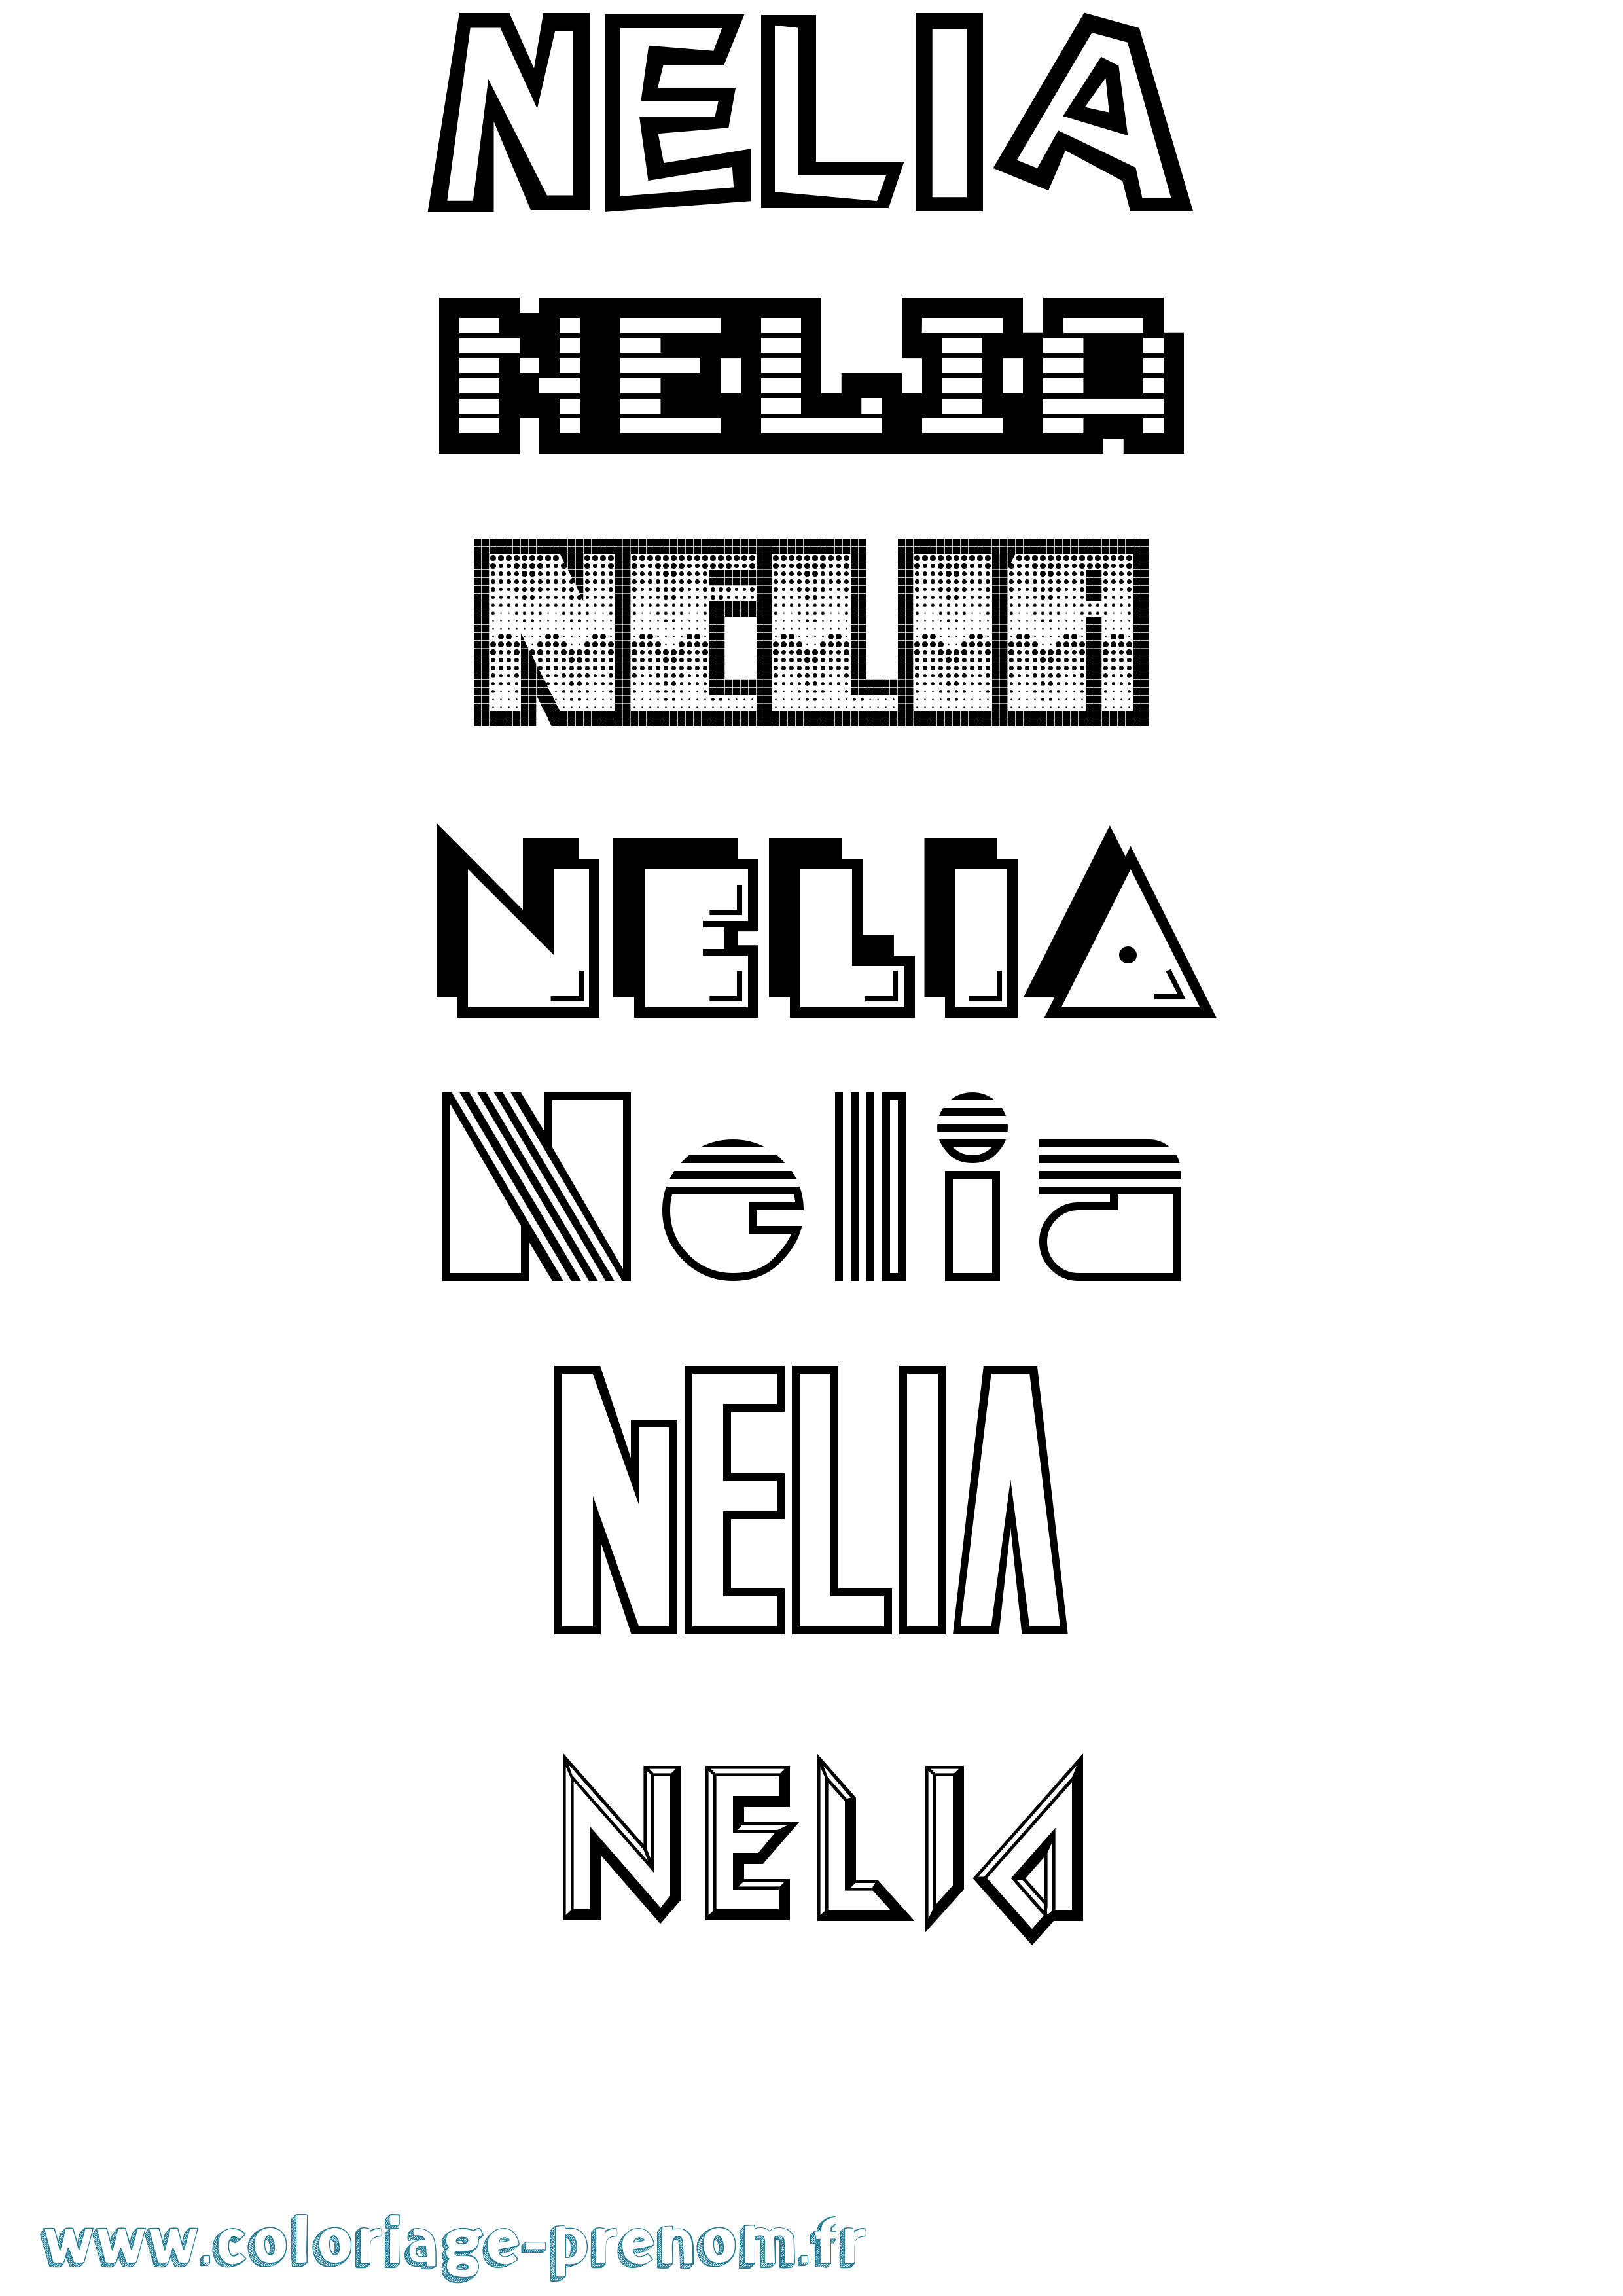 Coloriage prénom Nelia